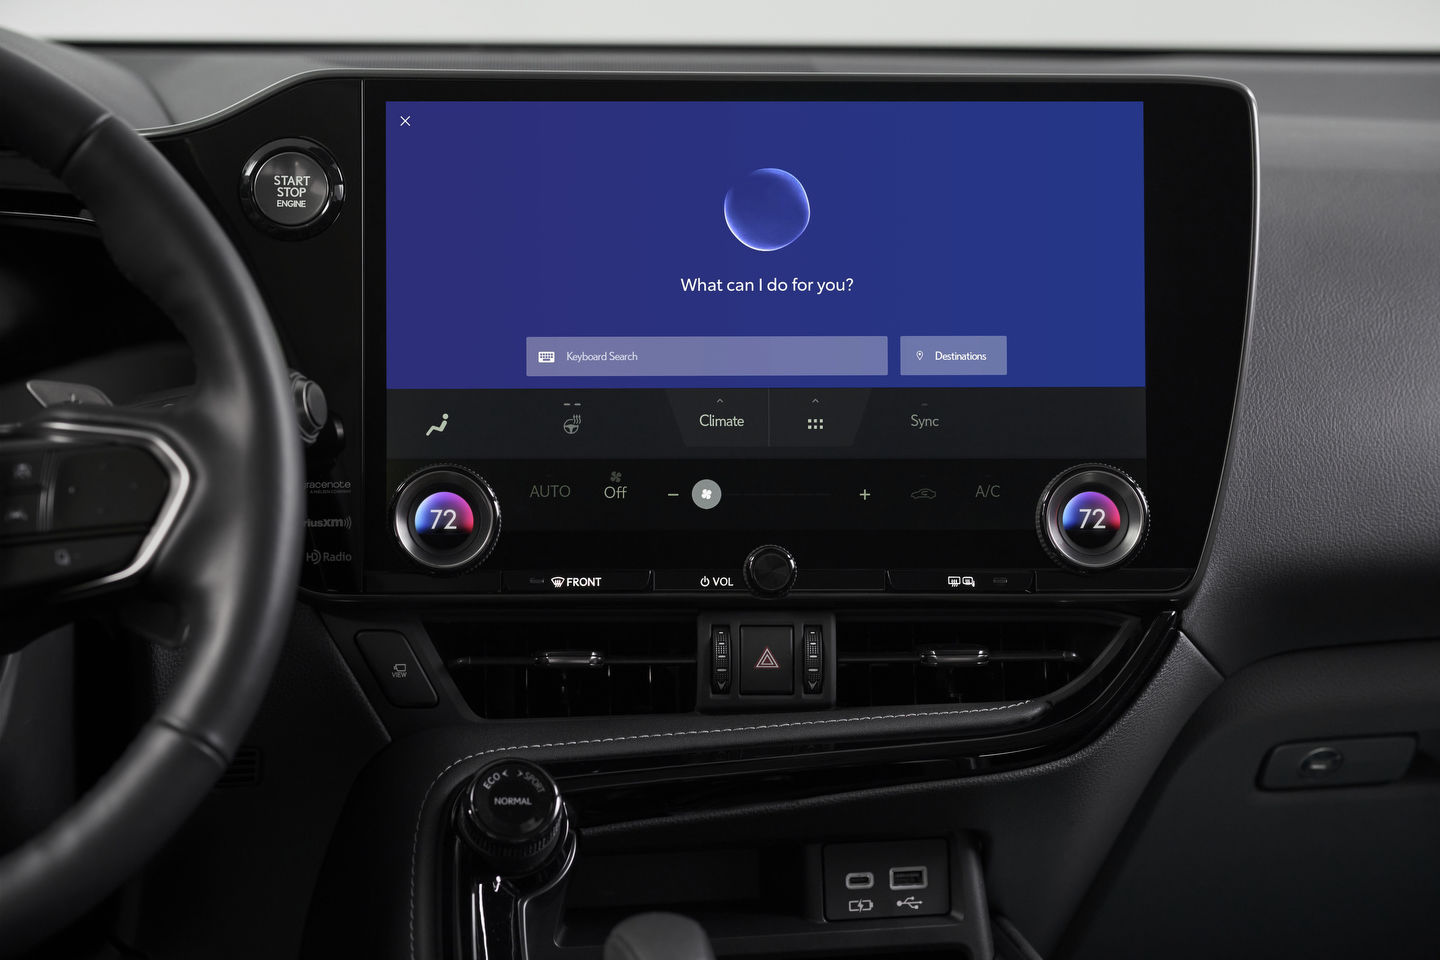 Hey Lexus: Lexus improves its infotainment system with advanced voice commands